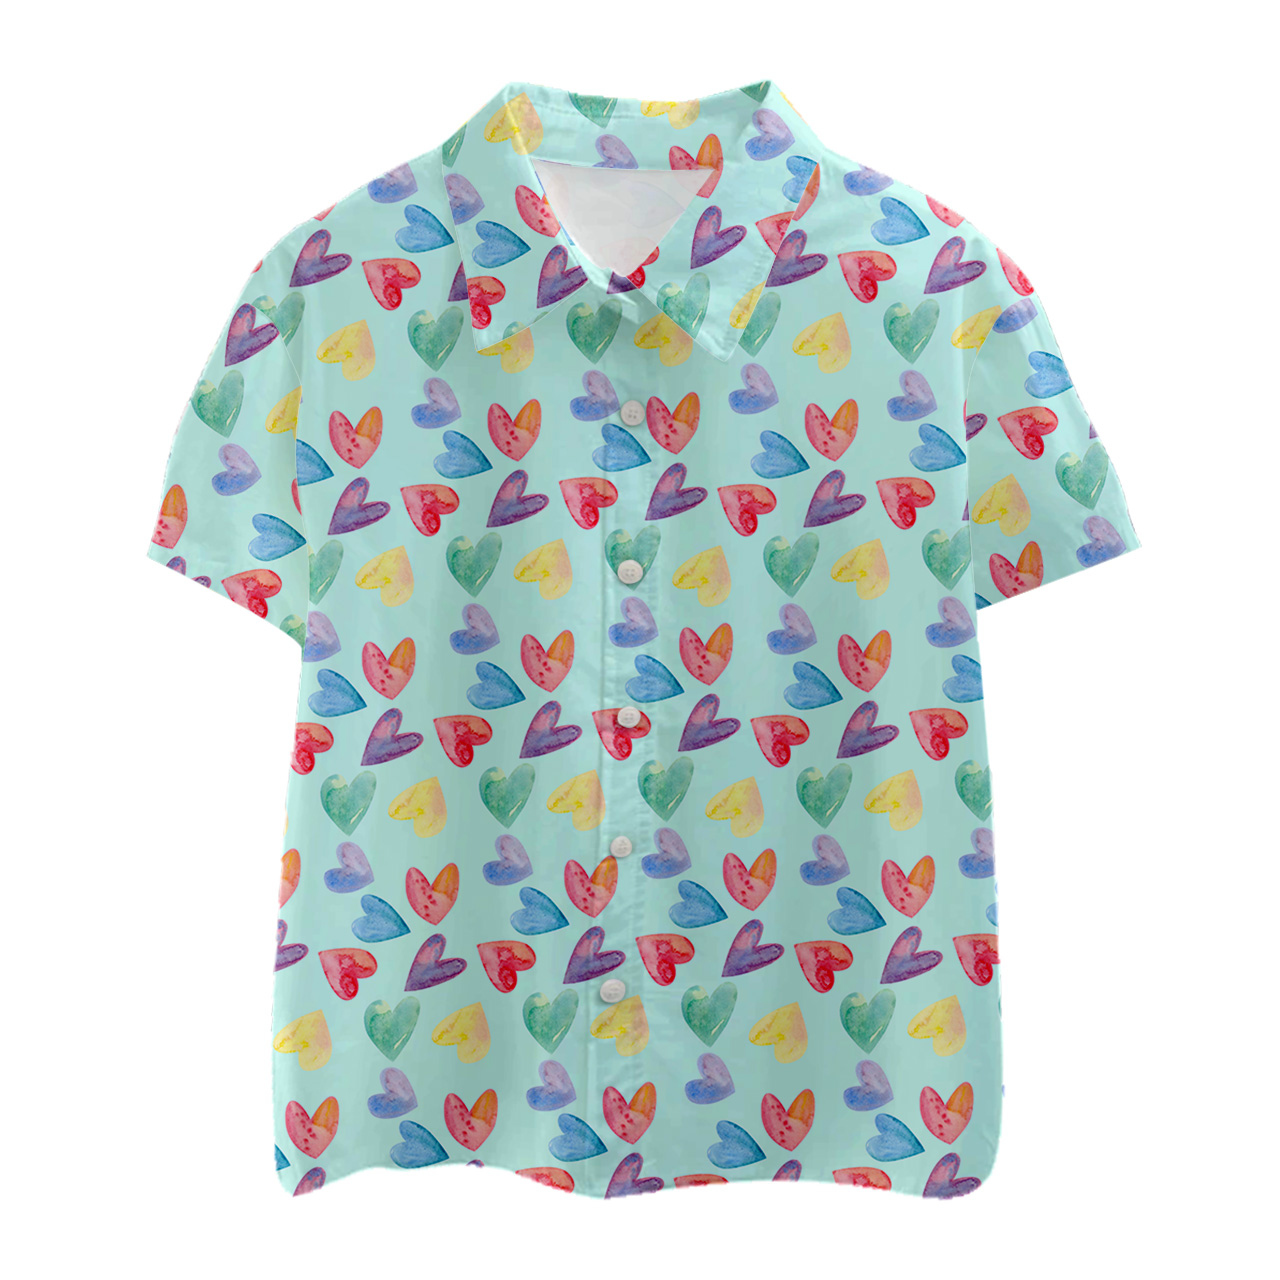 Watercolor Hearts Kids Button Shirt